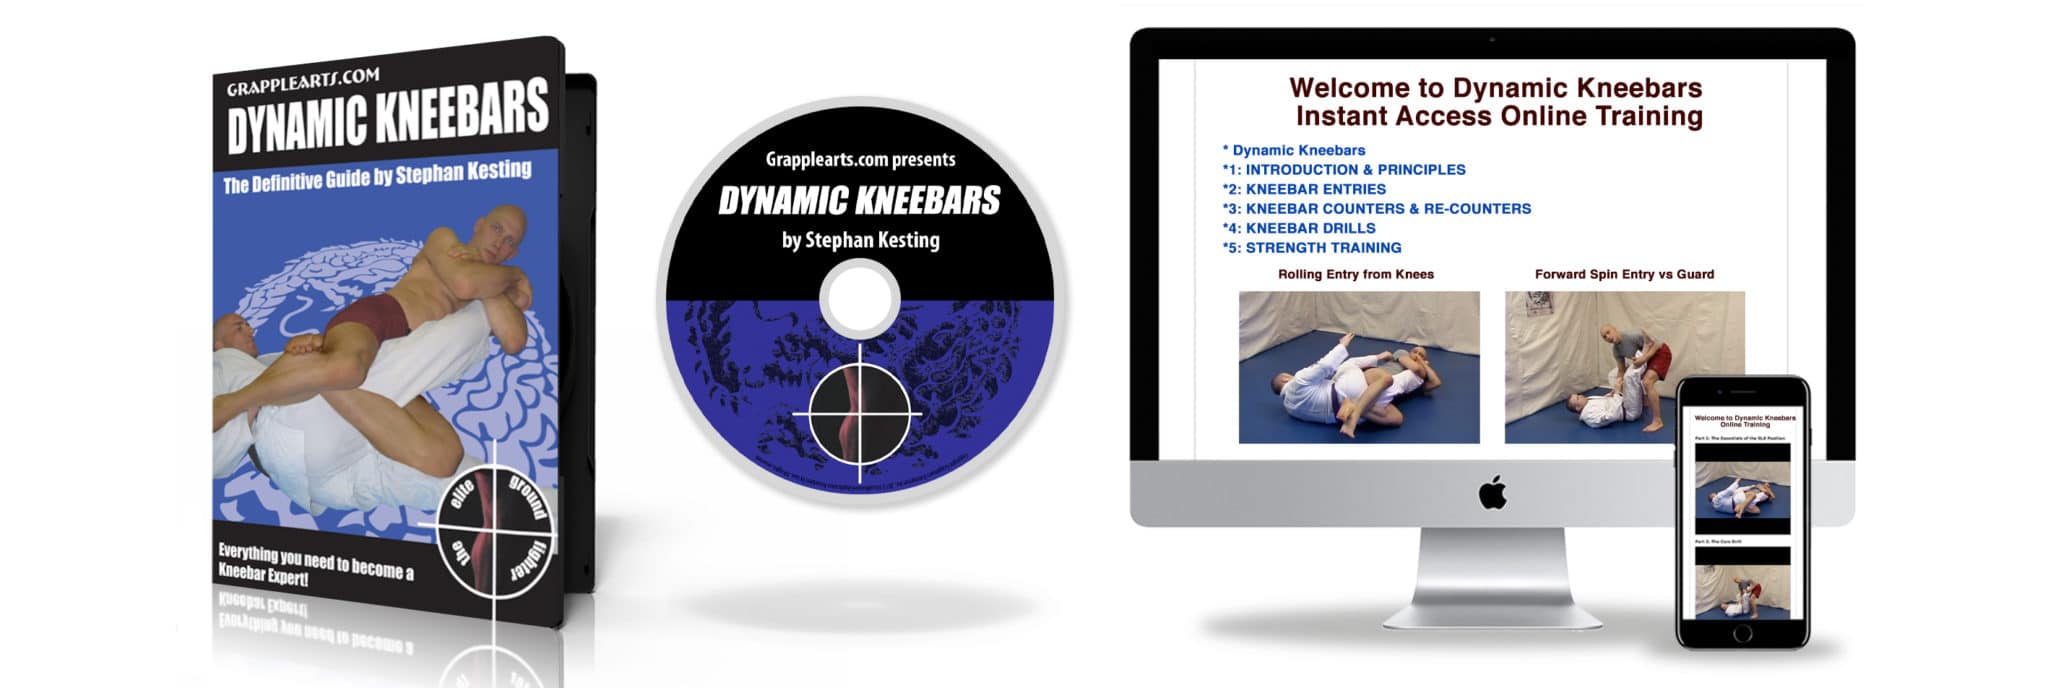 Dynamic-Kneebars-DVD-and-Online